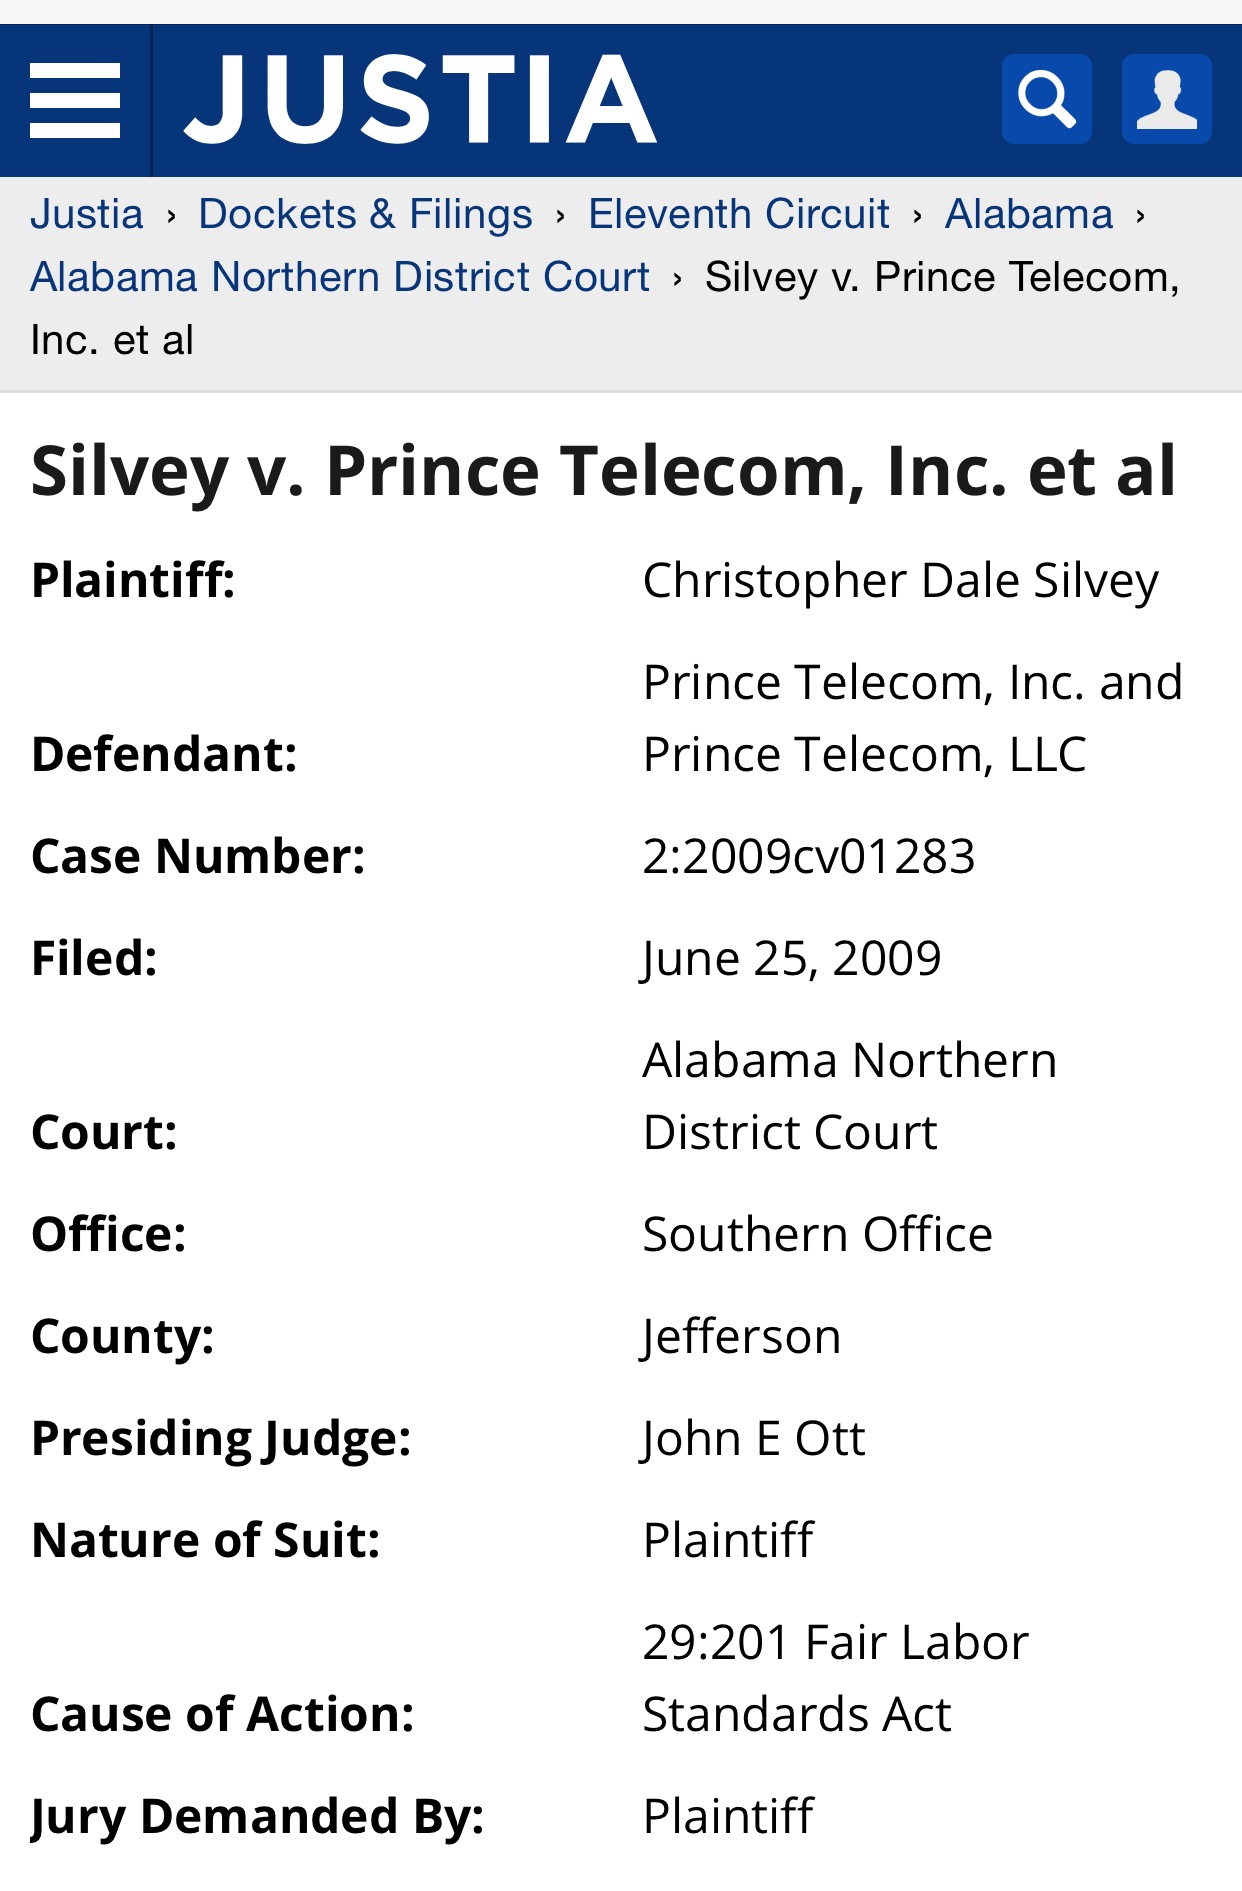 silvey v prince telecom Discrimination lawsuit .https://dockets.justia.com/docket/alabama/alndce/2:2009cv01283/127460